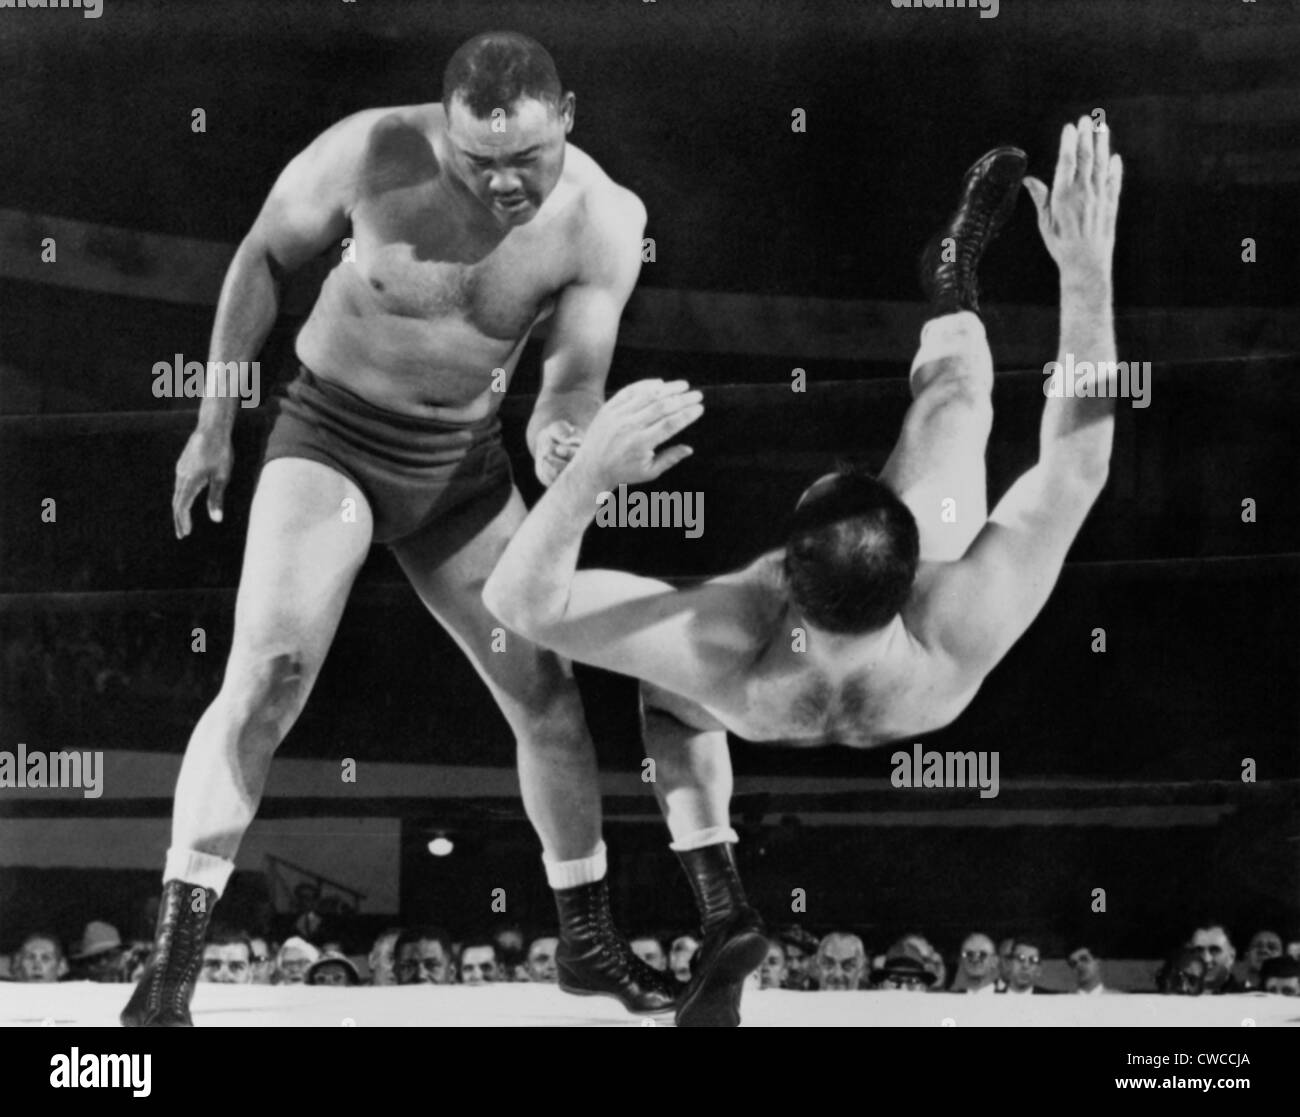 joe-louis-throws-jim-bernard-to-the-mat-during-a-1956-wrestling-match-CWCCJA.jpg